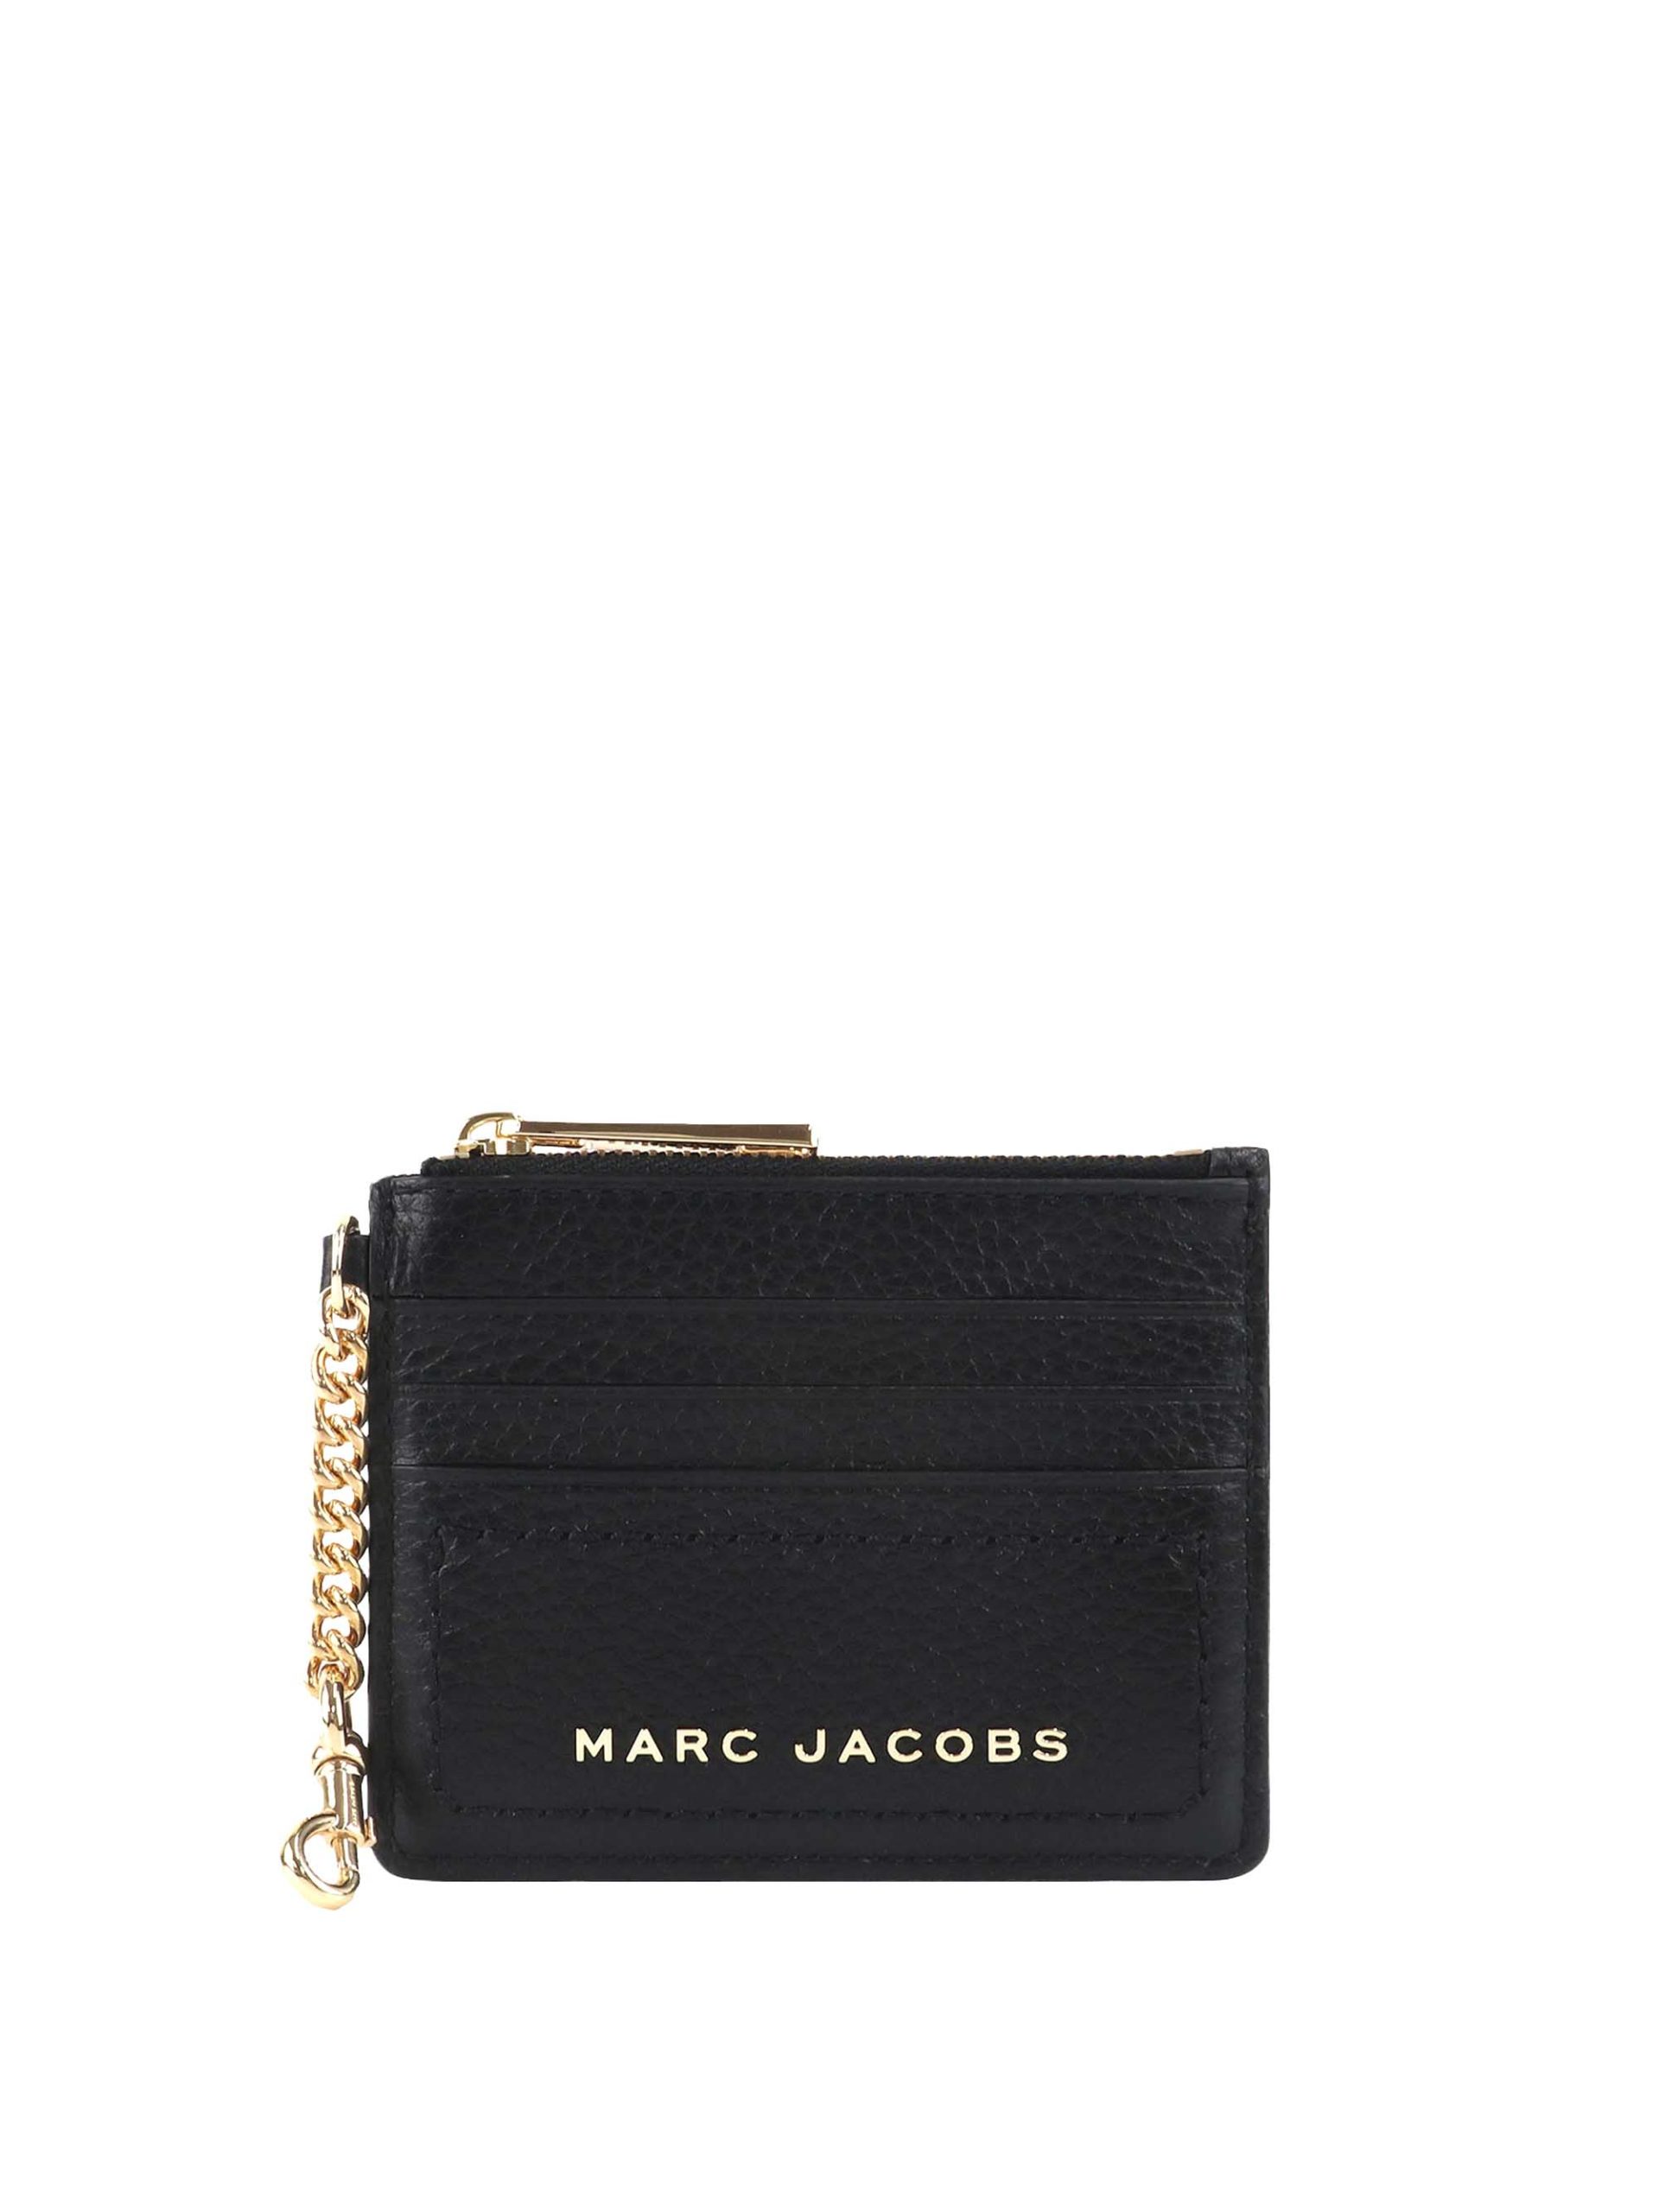 Marc Jacobs Card Holder Keychain Black - Averand